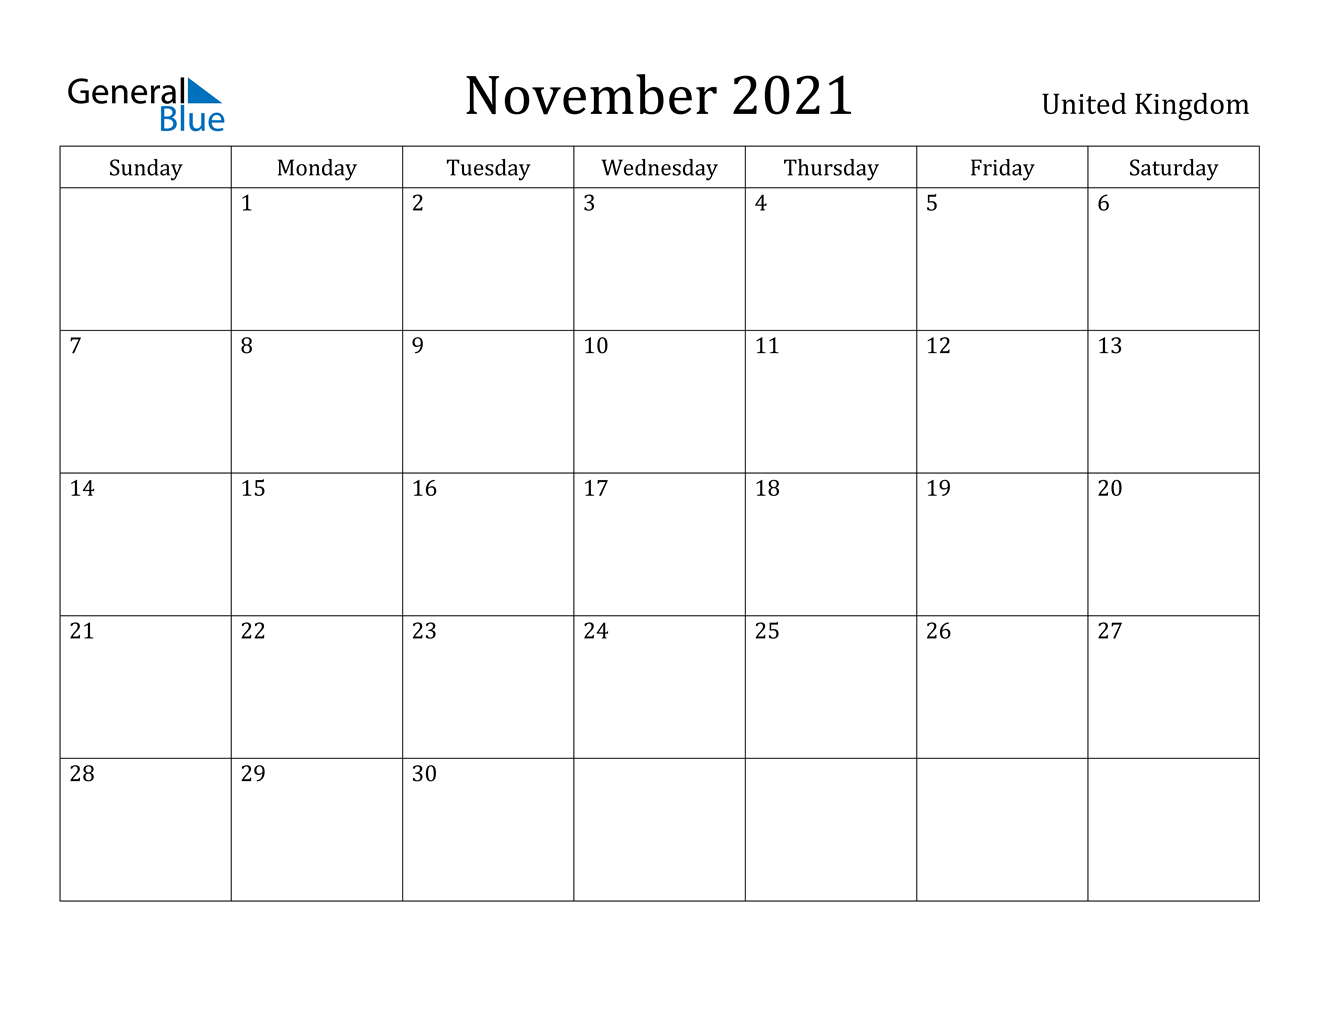 November 2021 Calendar - United Kingdom